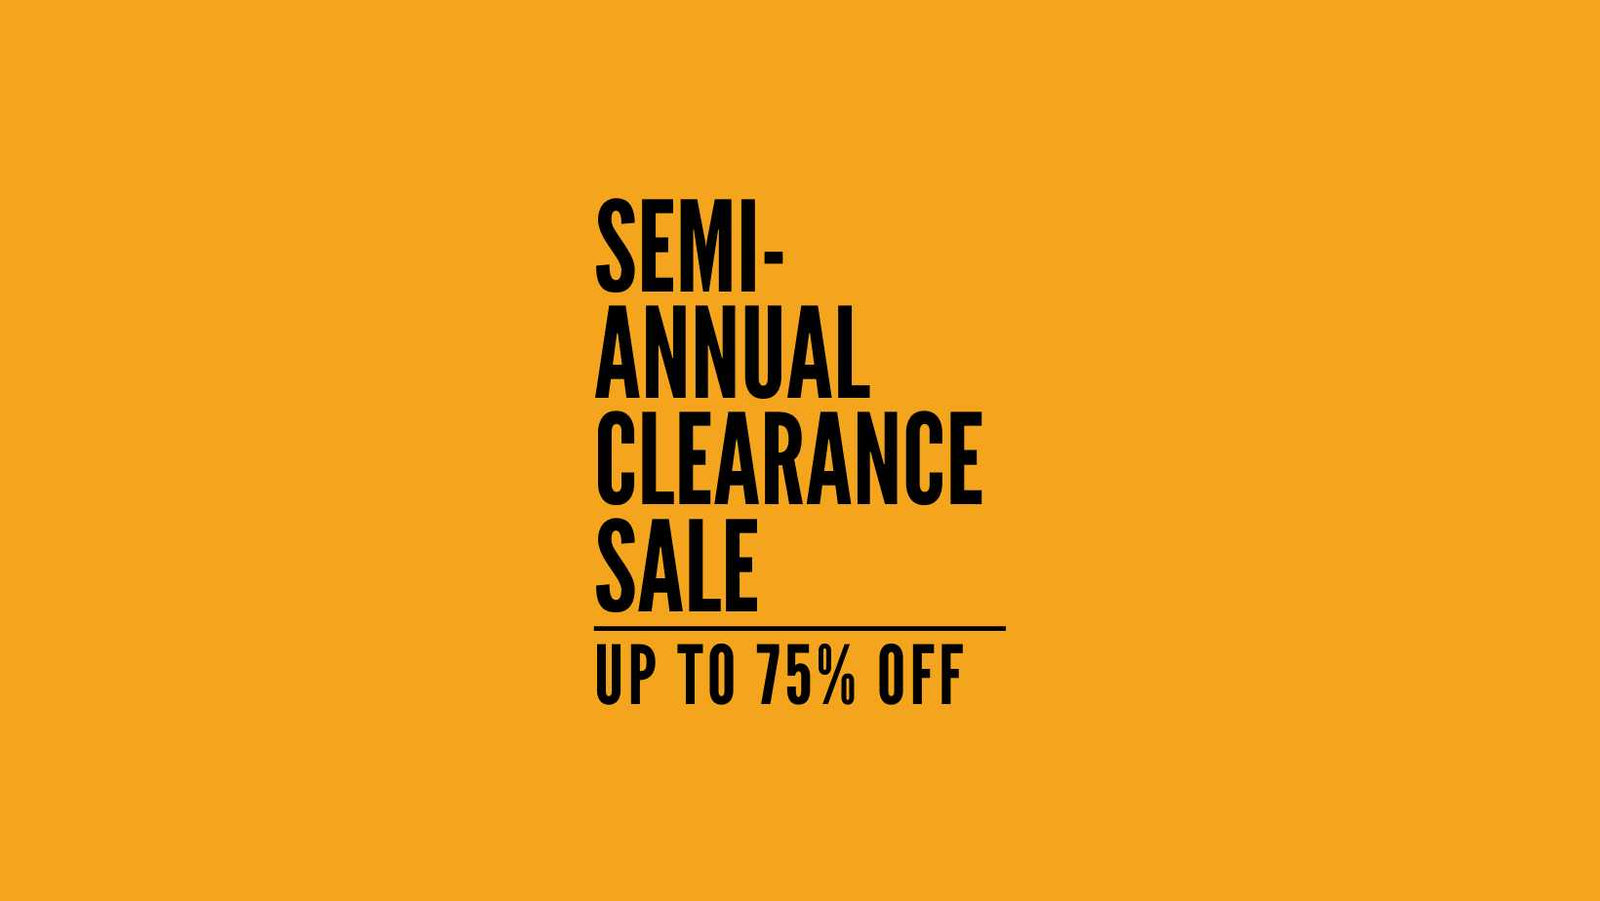 Clearance Sale: Now 50-75% Off - Yarn Folk